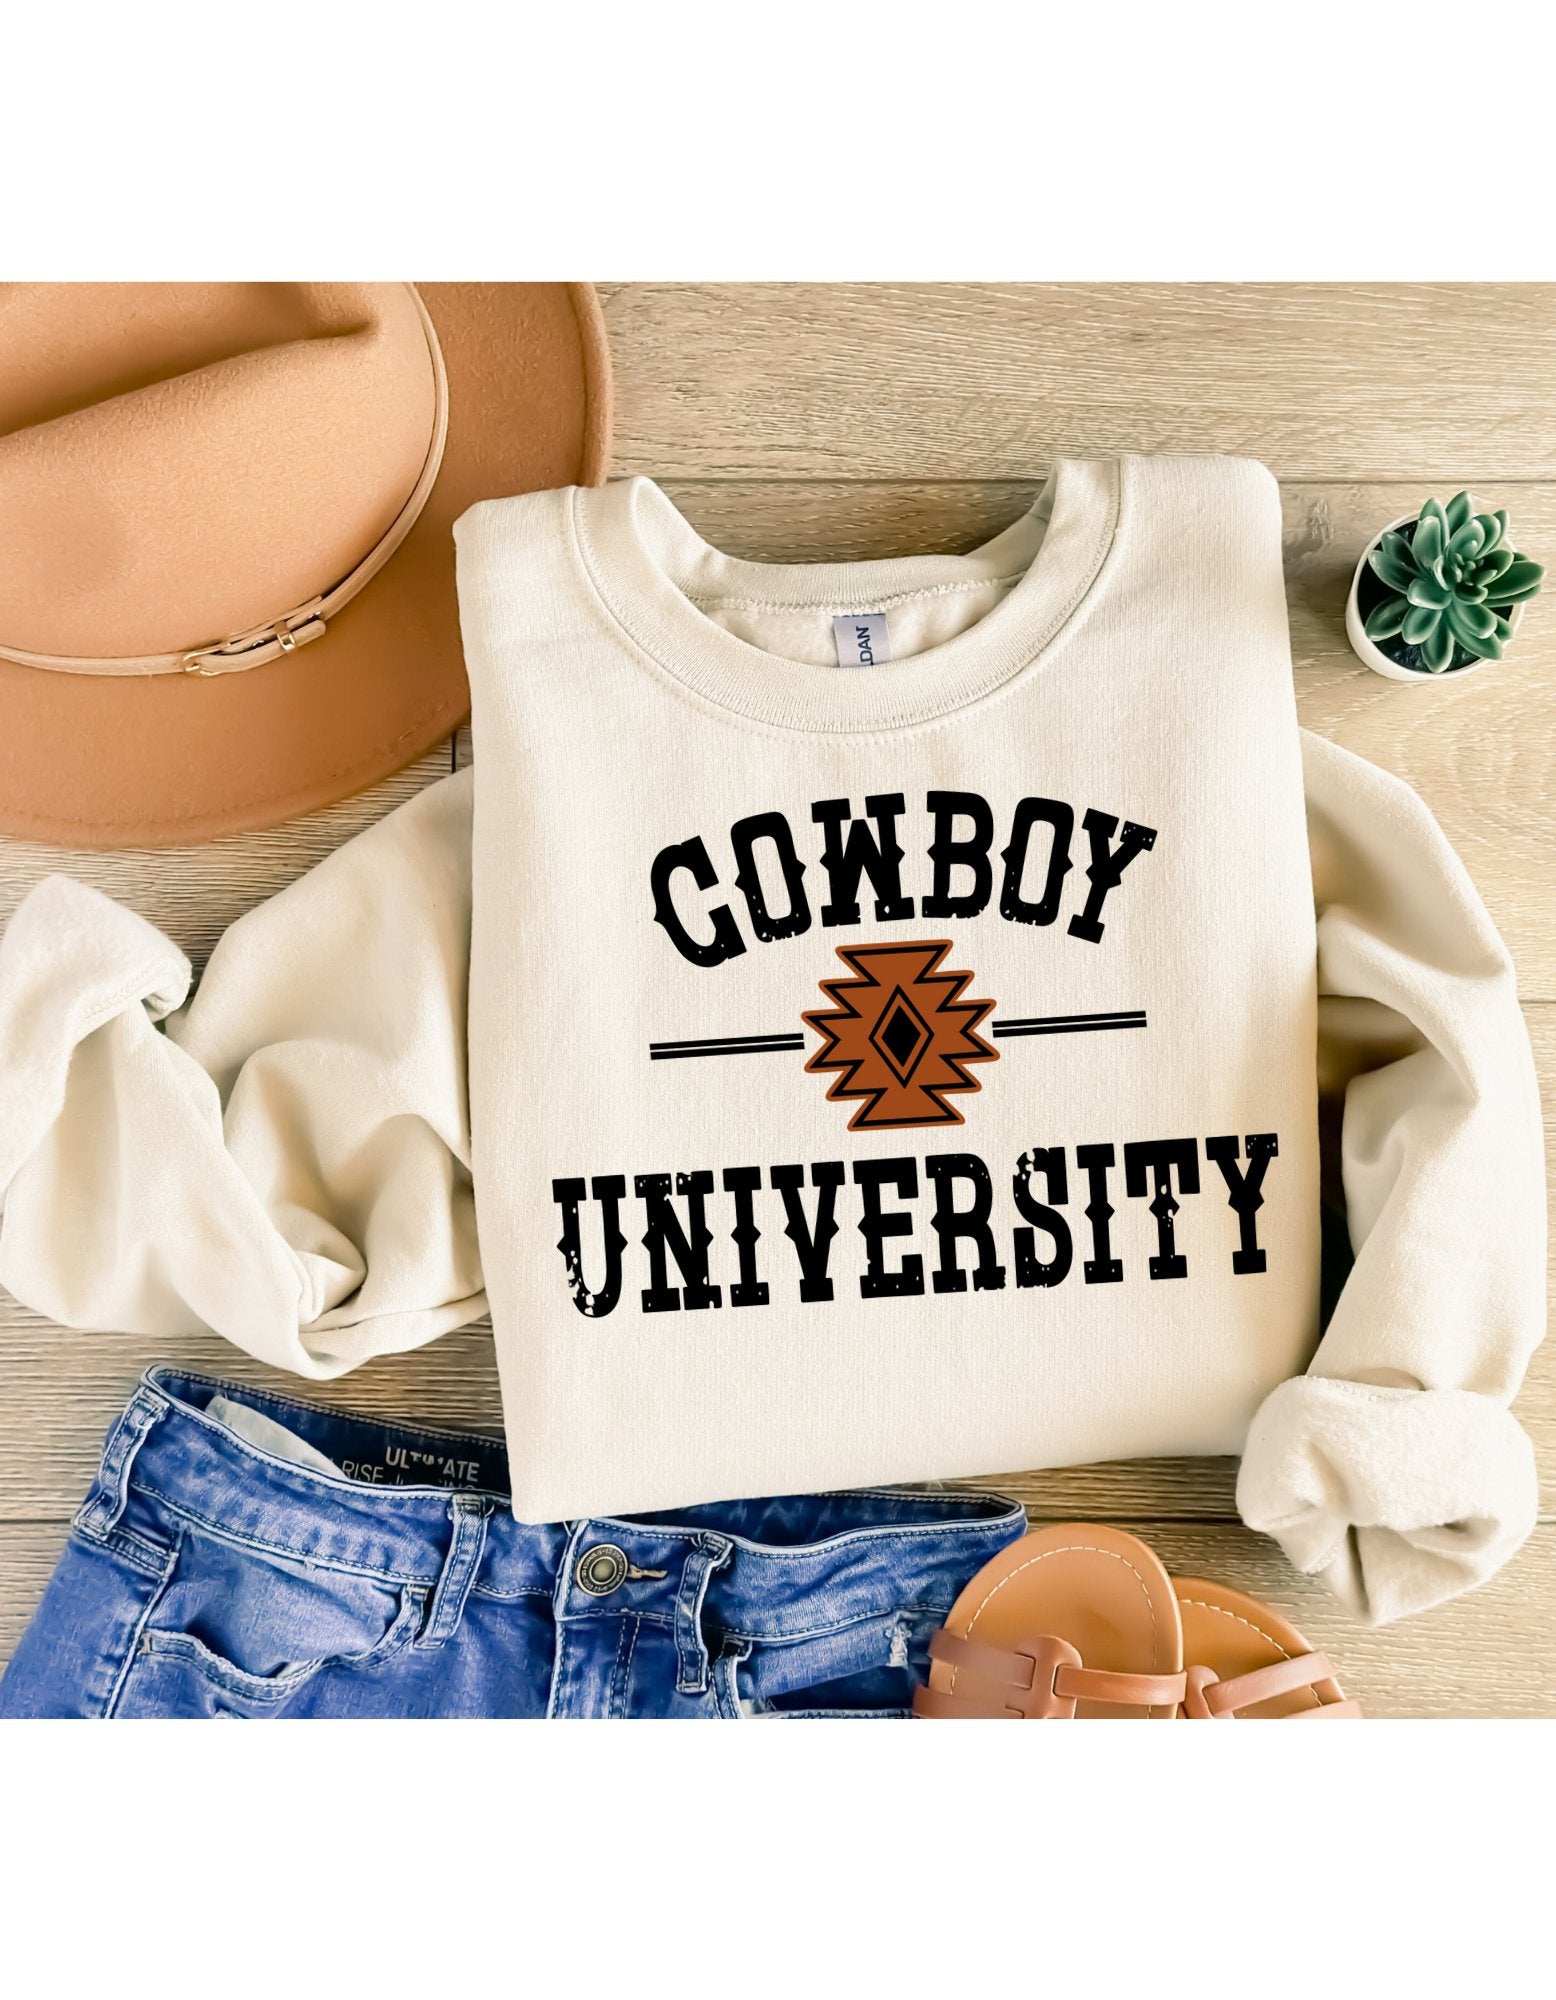 Cowboy university crewneck sweatshirt - 4 little hearts